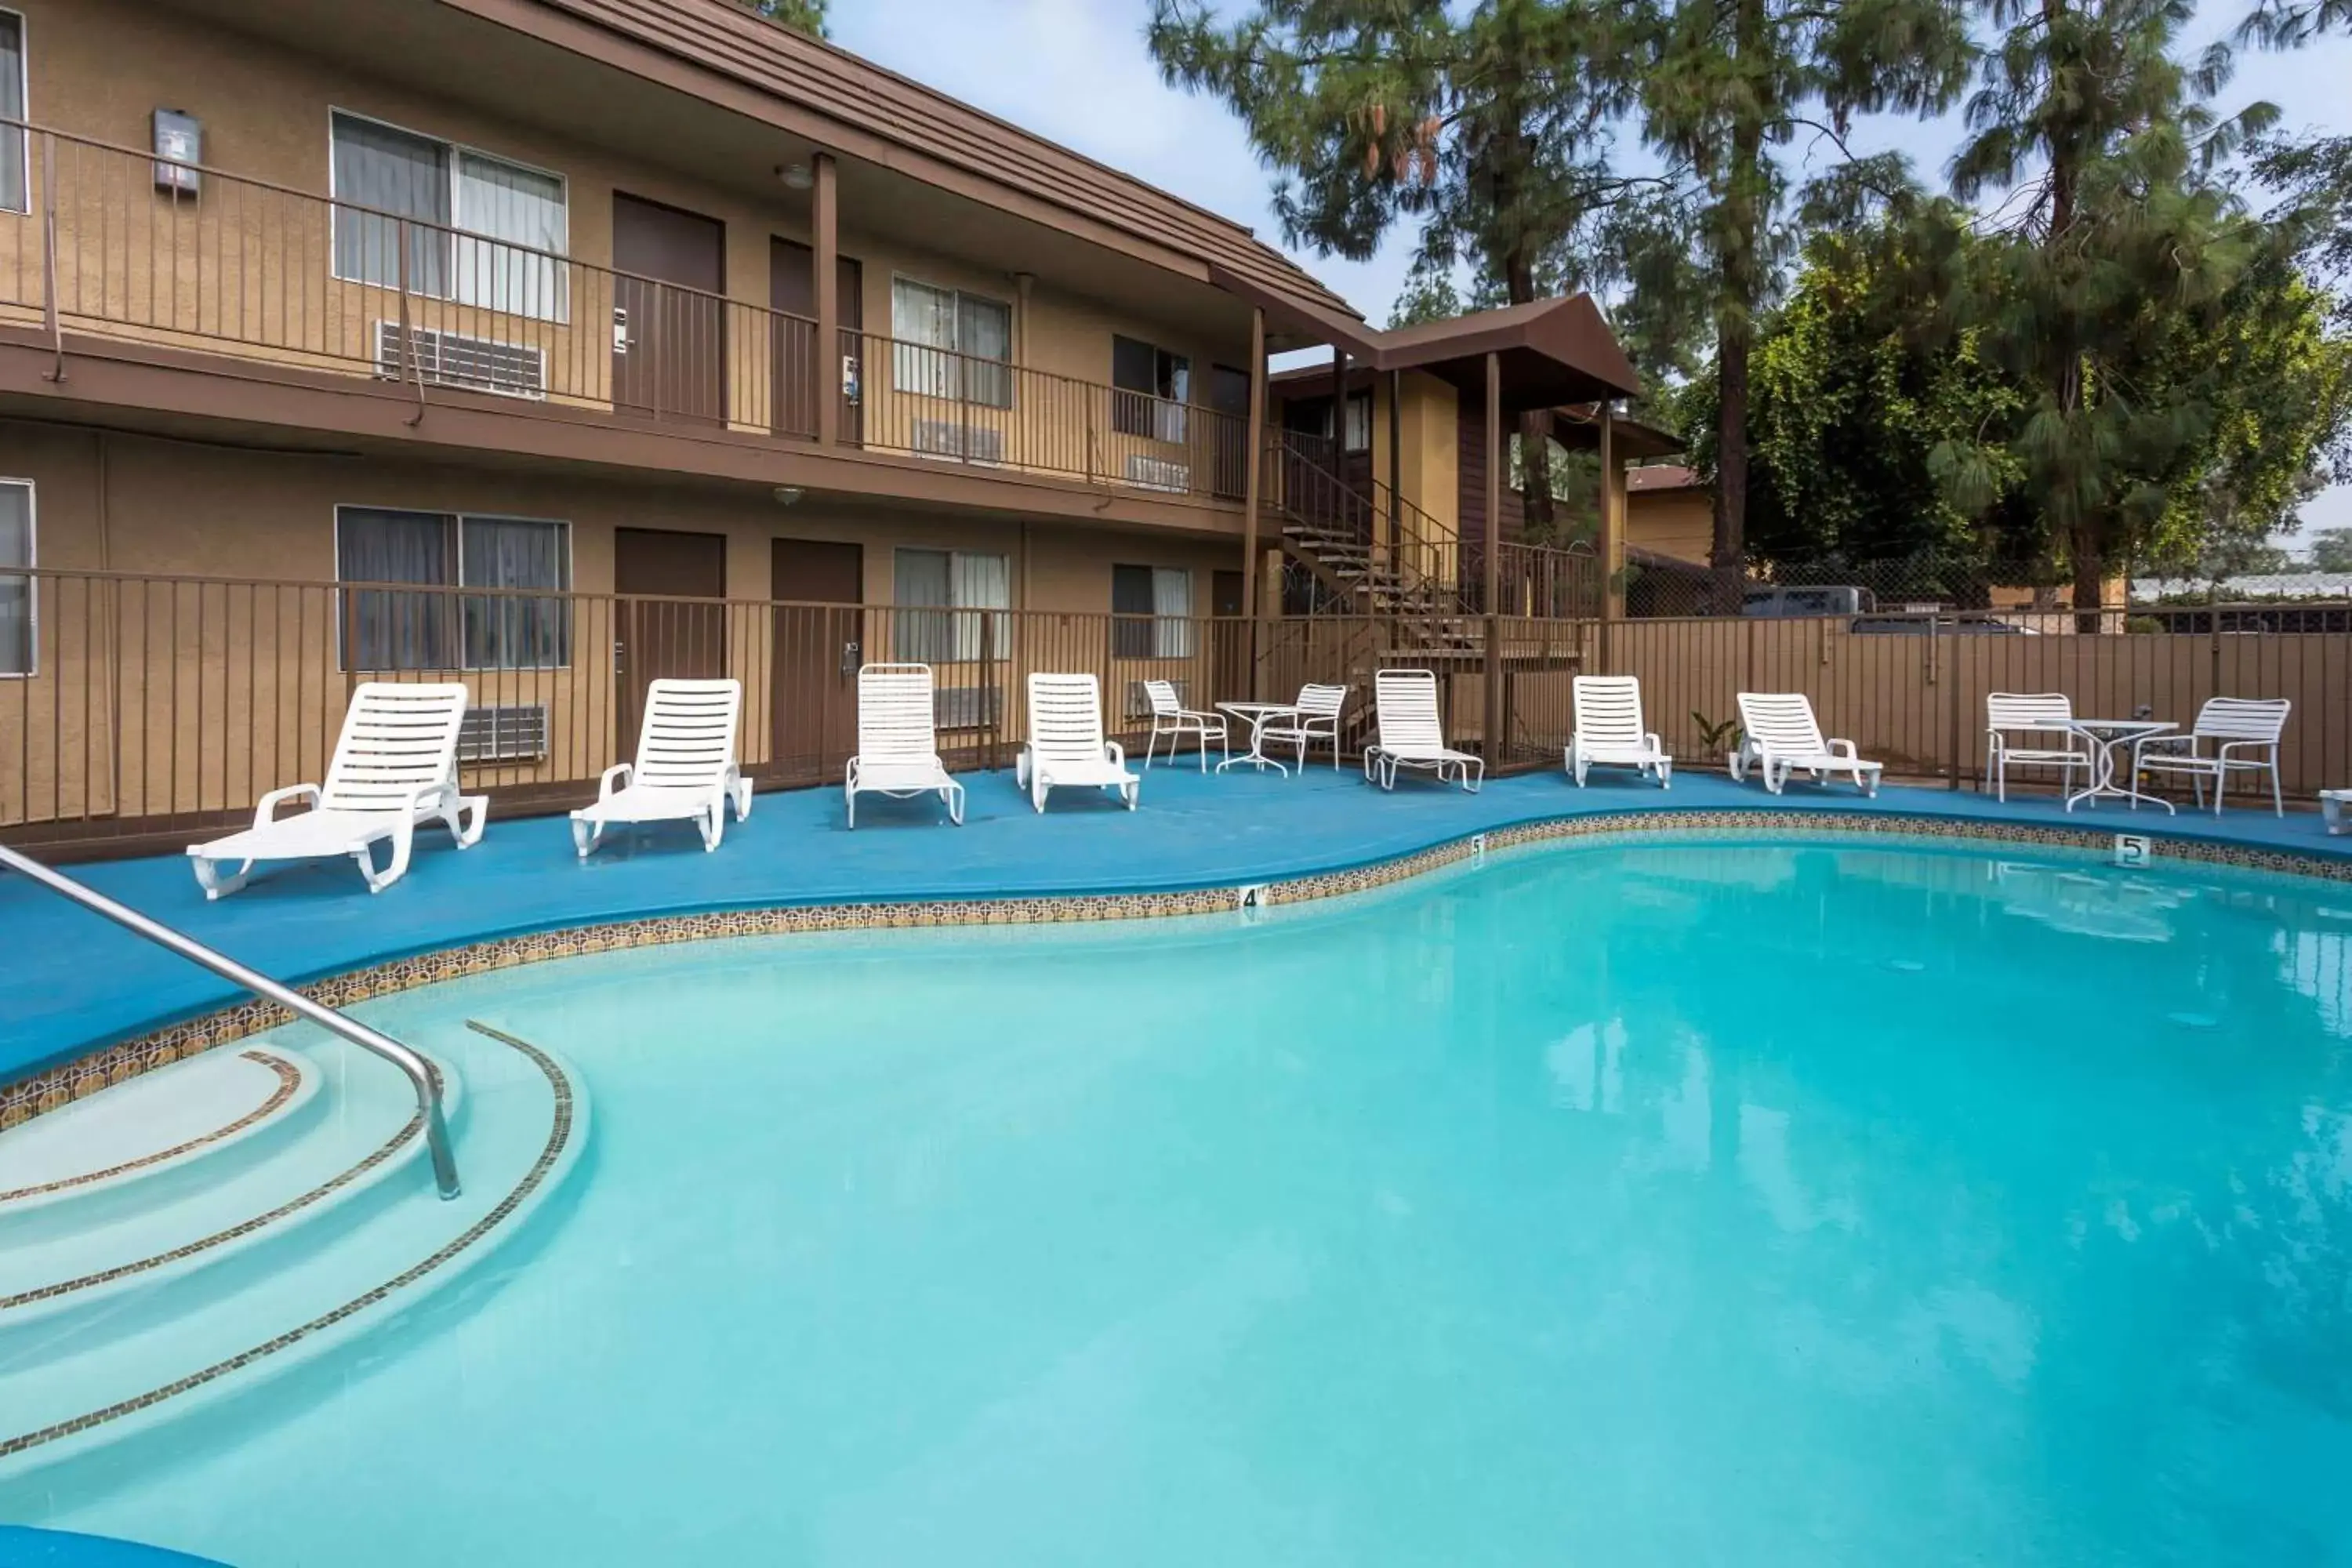 On site, Swimming Pool in Days Inn by Wyndham in San Bernardino